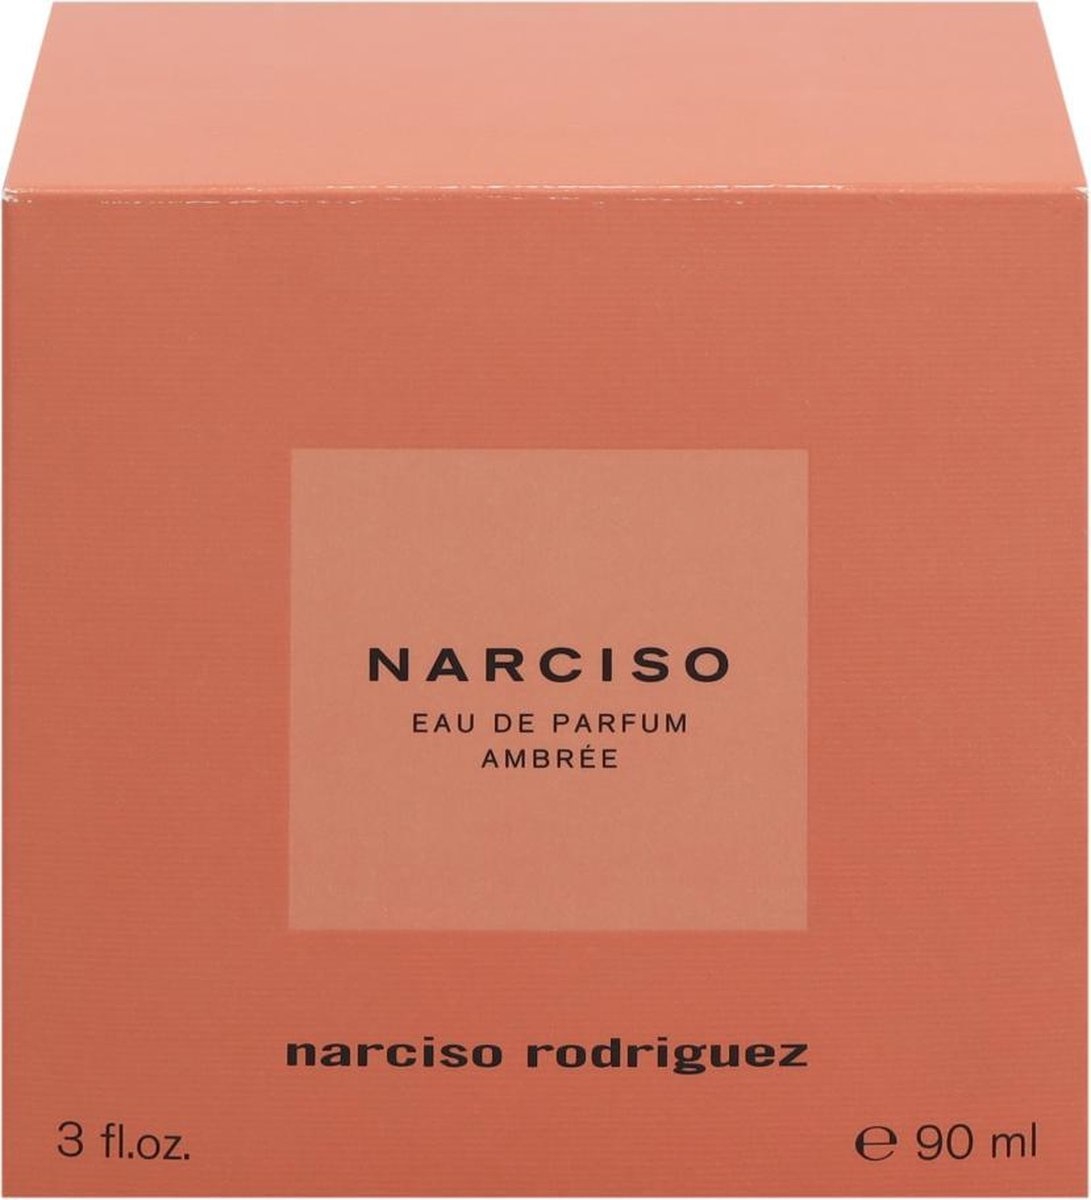 Narciso Rodriguez Narciso Ambree - 90 ml - Women's Eau de Parfum - Packaging damaged